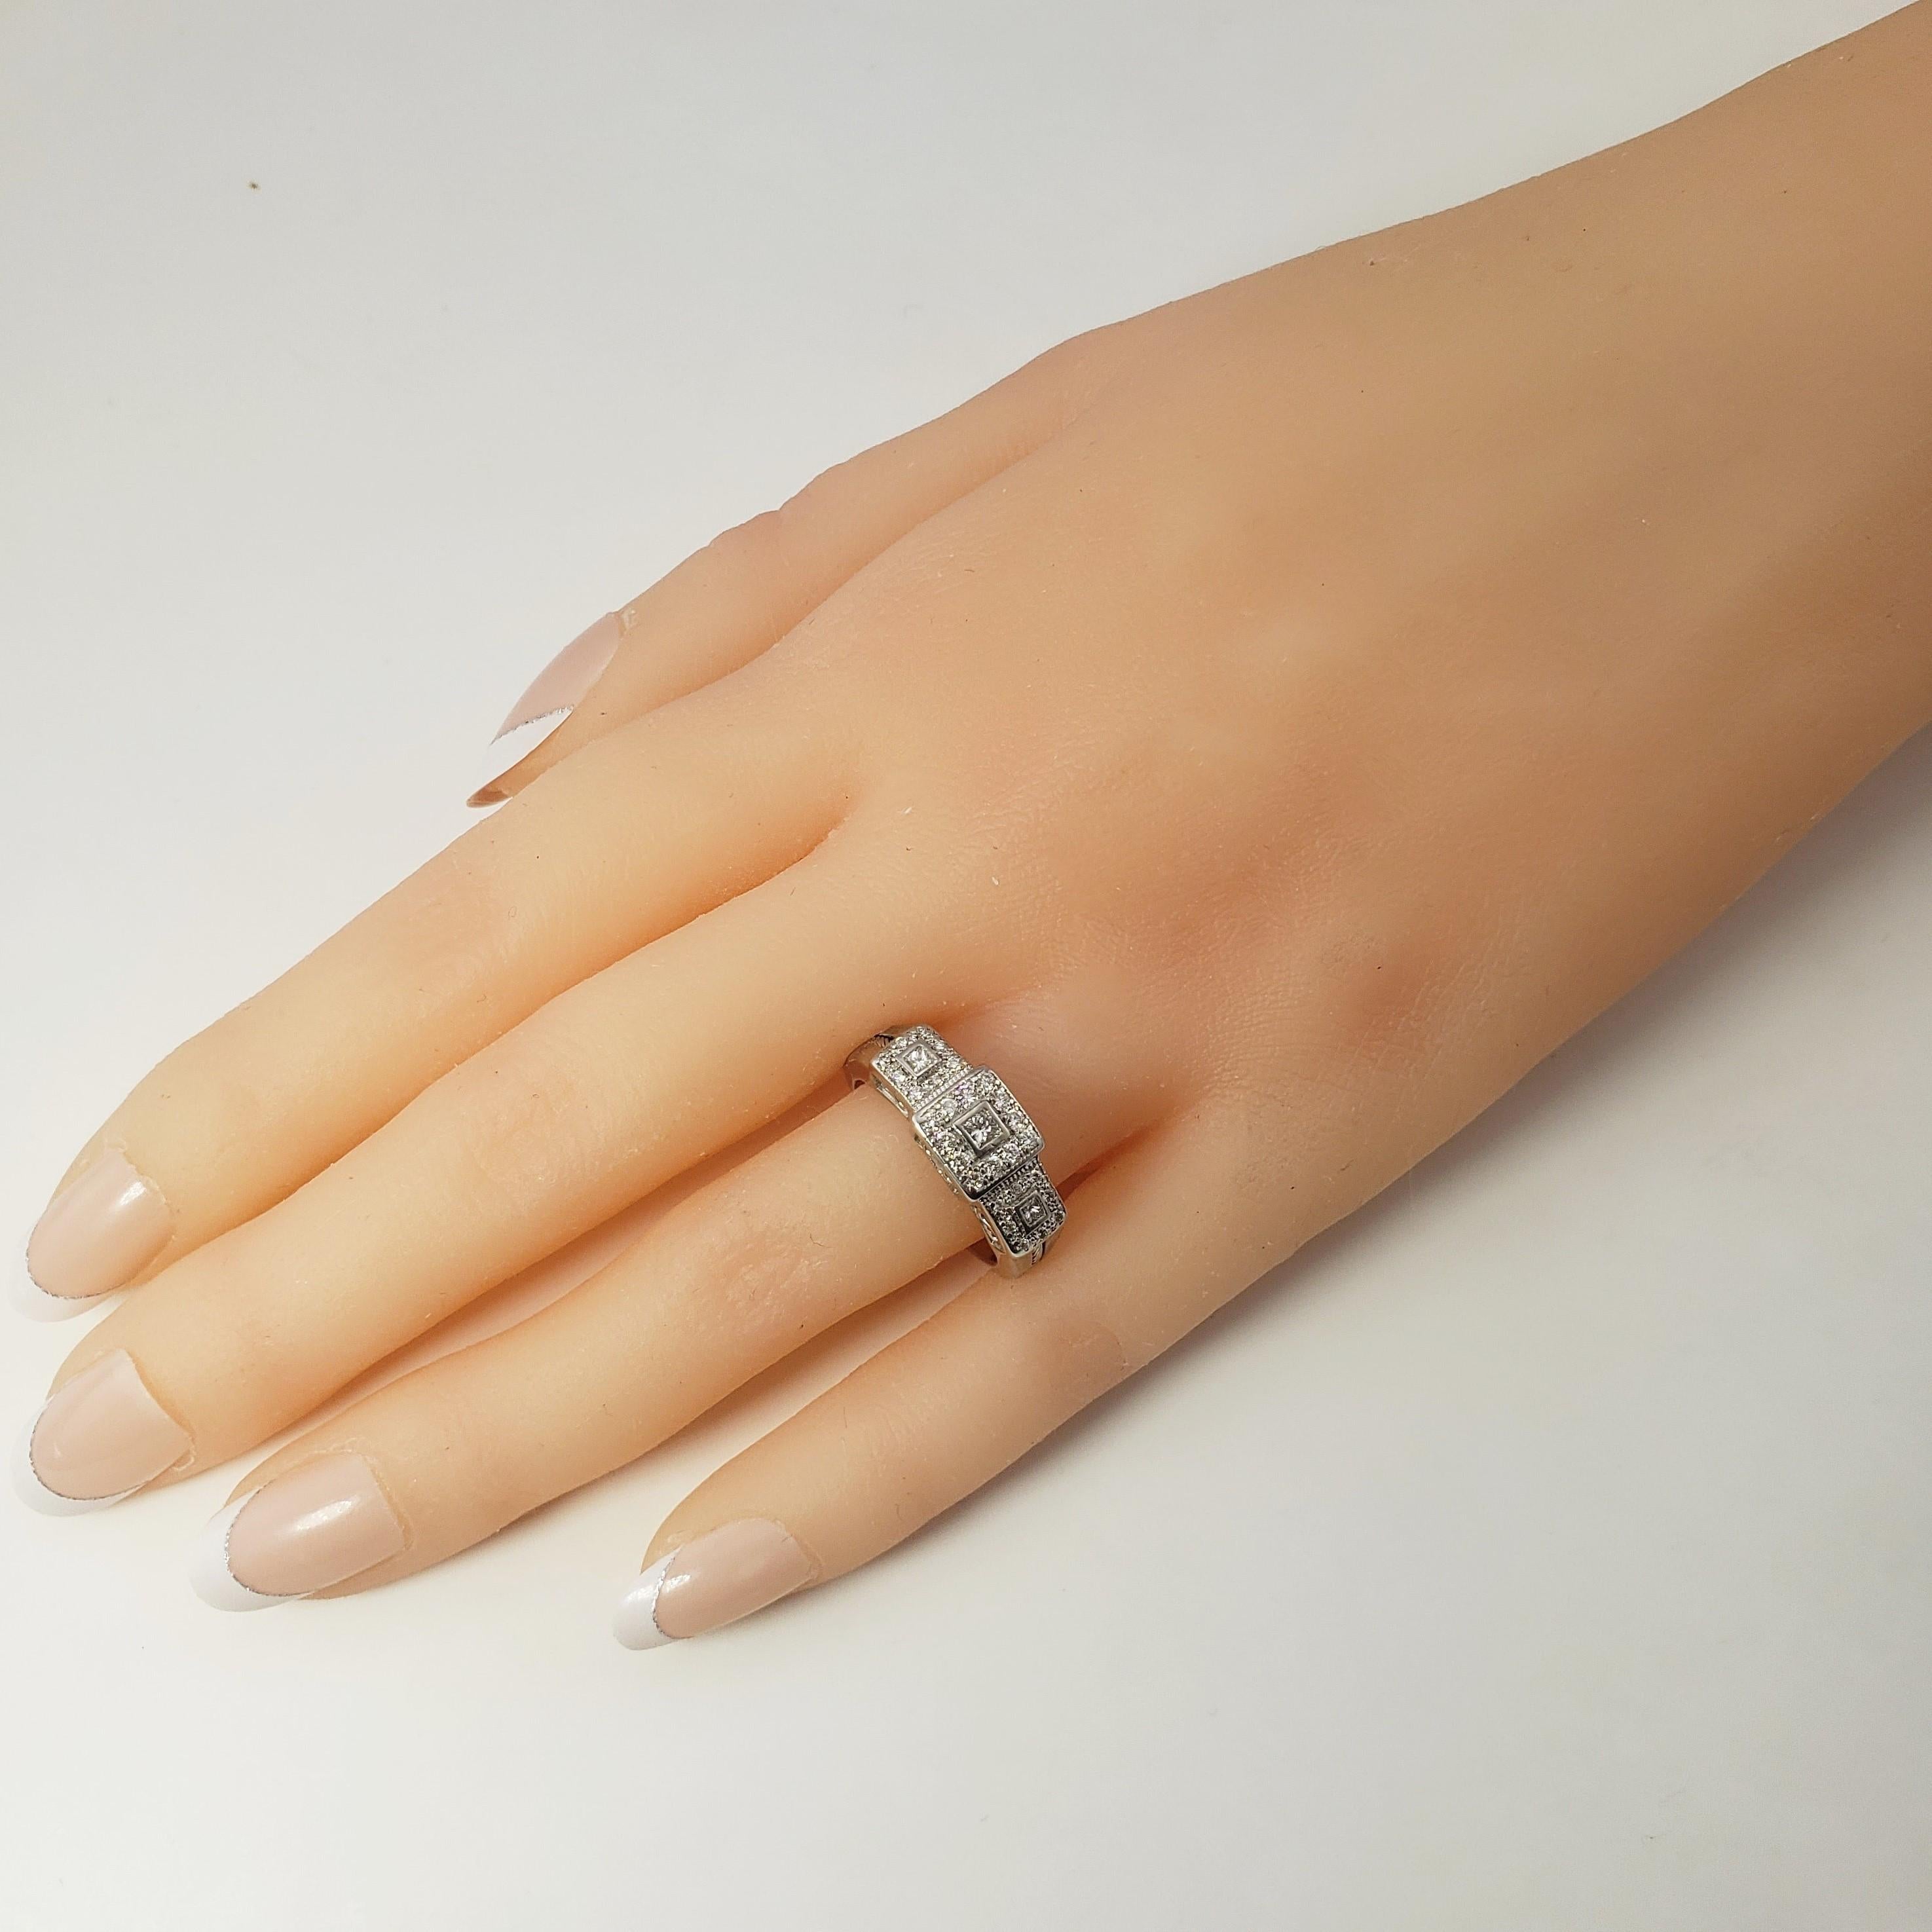 Charriol 18 Karat White Gold and Diamond Ring For Sale 1